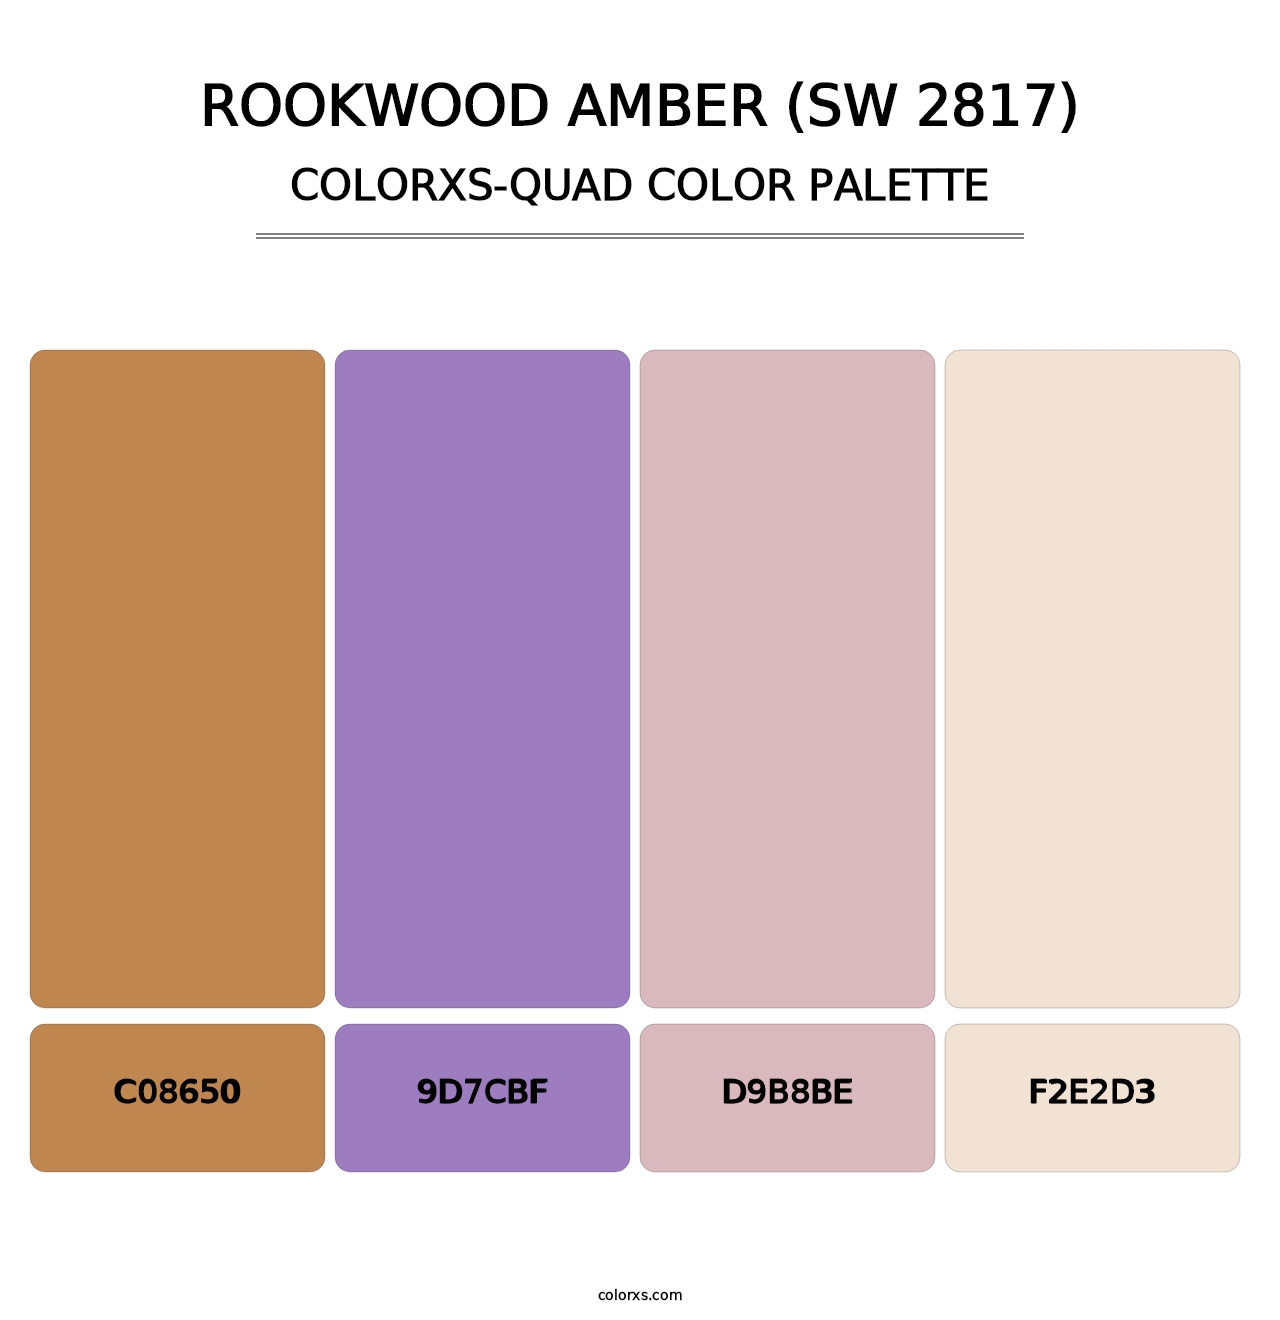 Rookwood Amber (SW 2817) - Colorxs Quad Palette